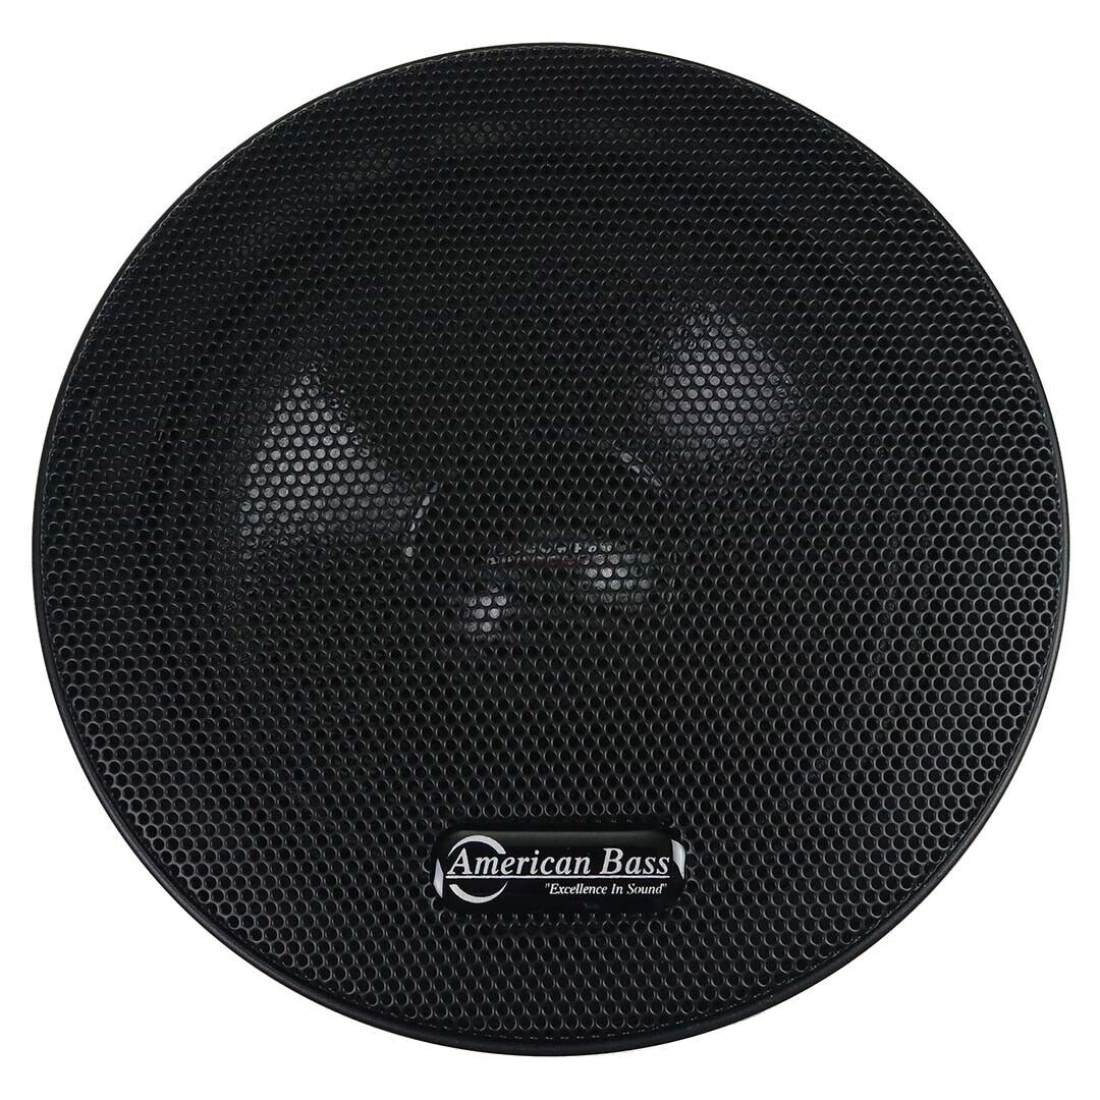 American Bass GODFATHER 6.5CC 6.5" Carbon Cone 800W Max 4-Ohms Midrange Speaker